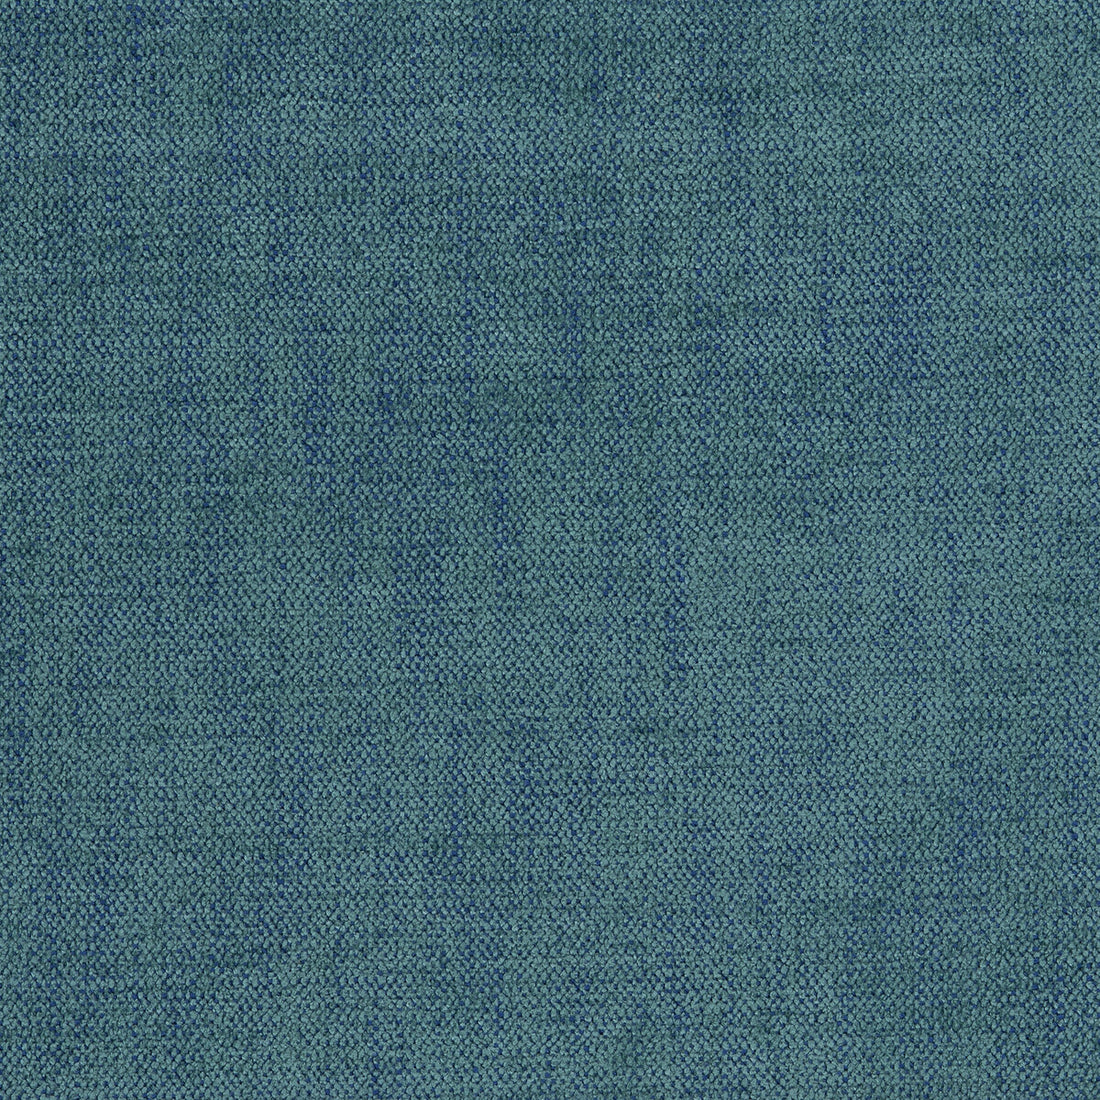 Kravet Design fabric in 33423-13 color - pattern 33423.13.0 - by Kravet Design in the Inspirations collection